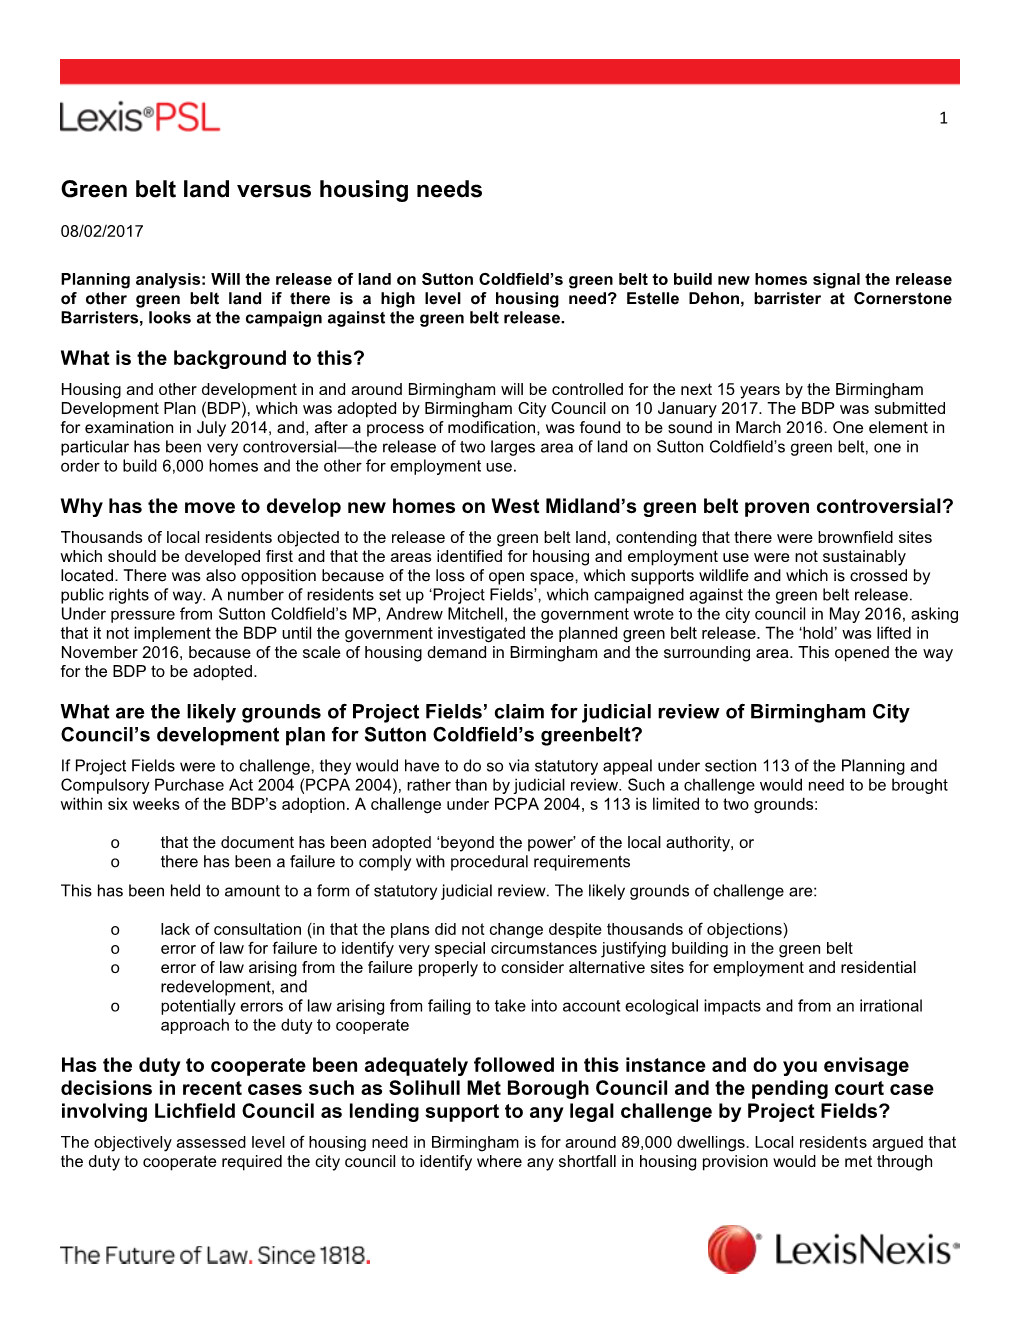 Green Belt Land Versus Housing Needs